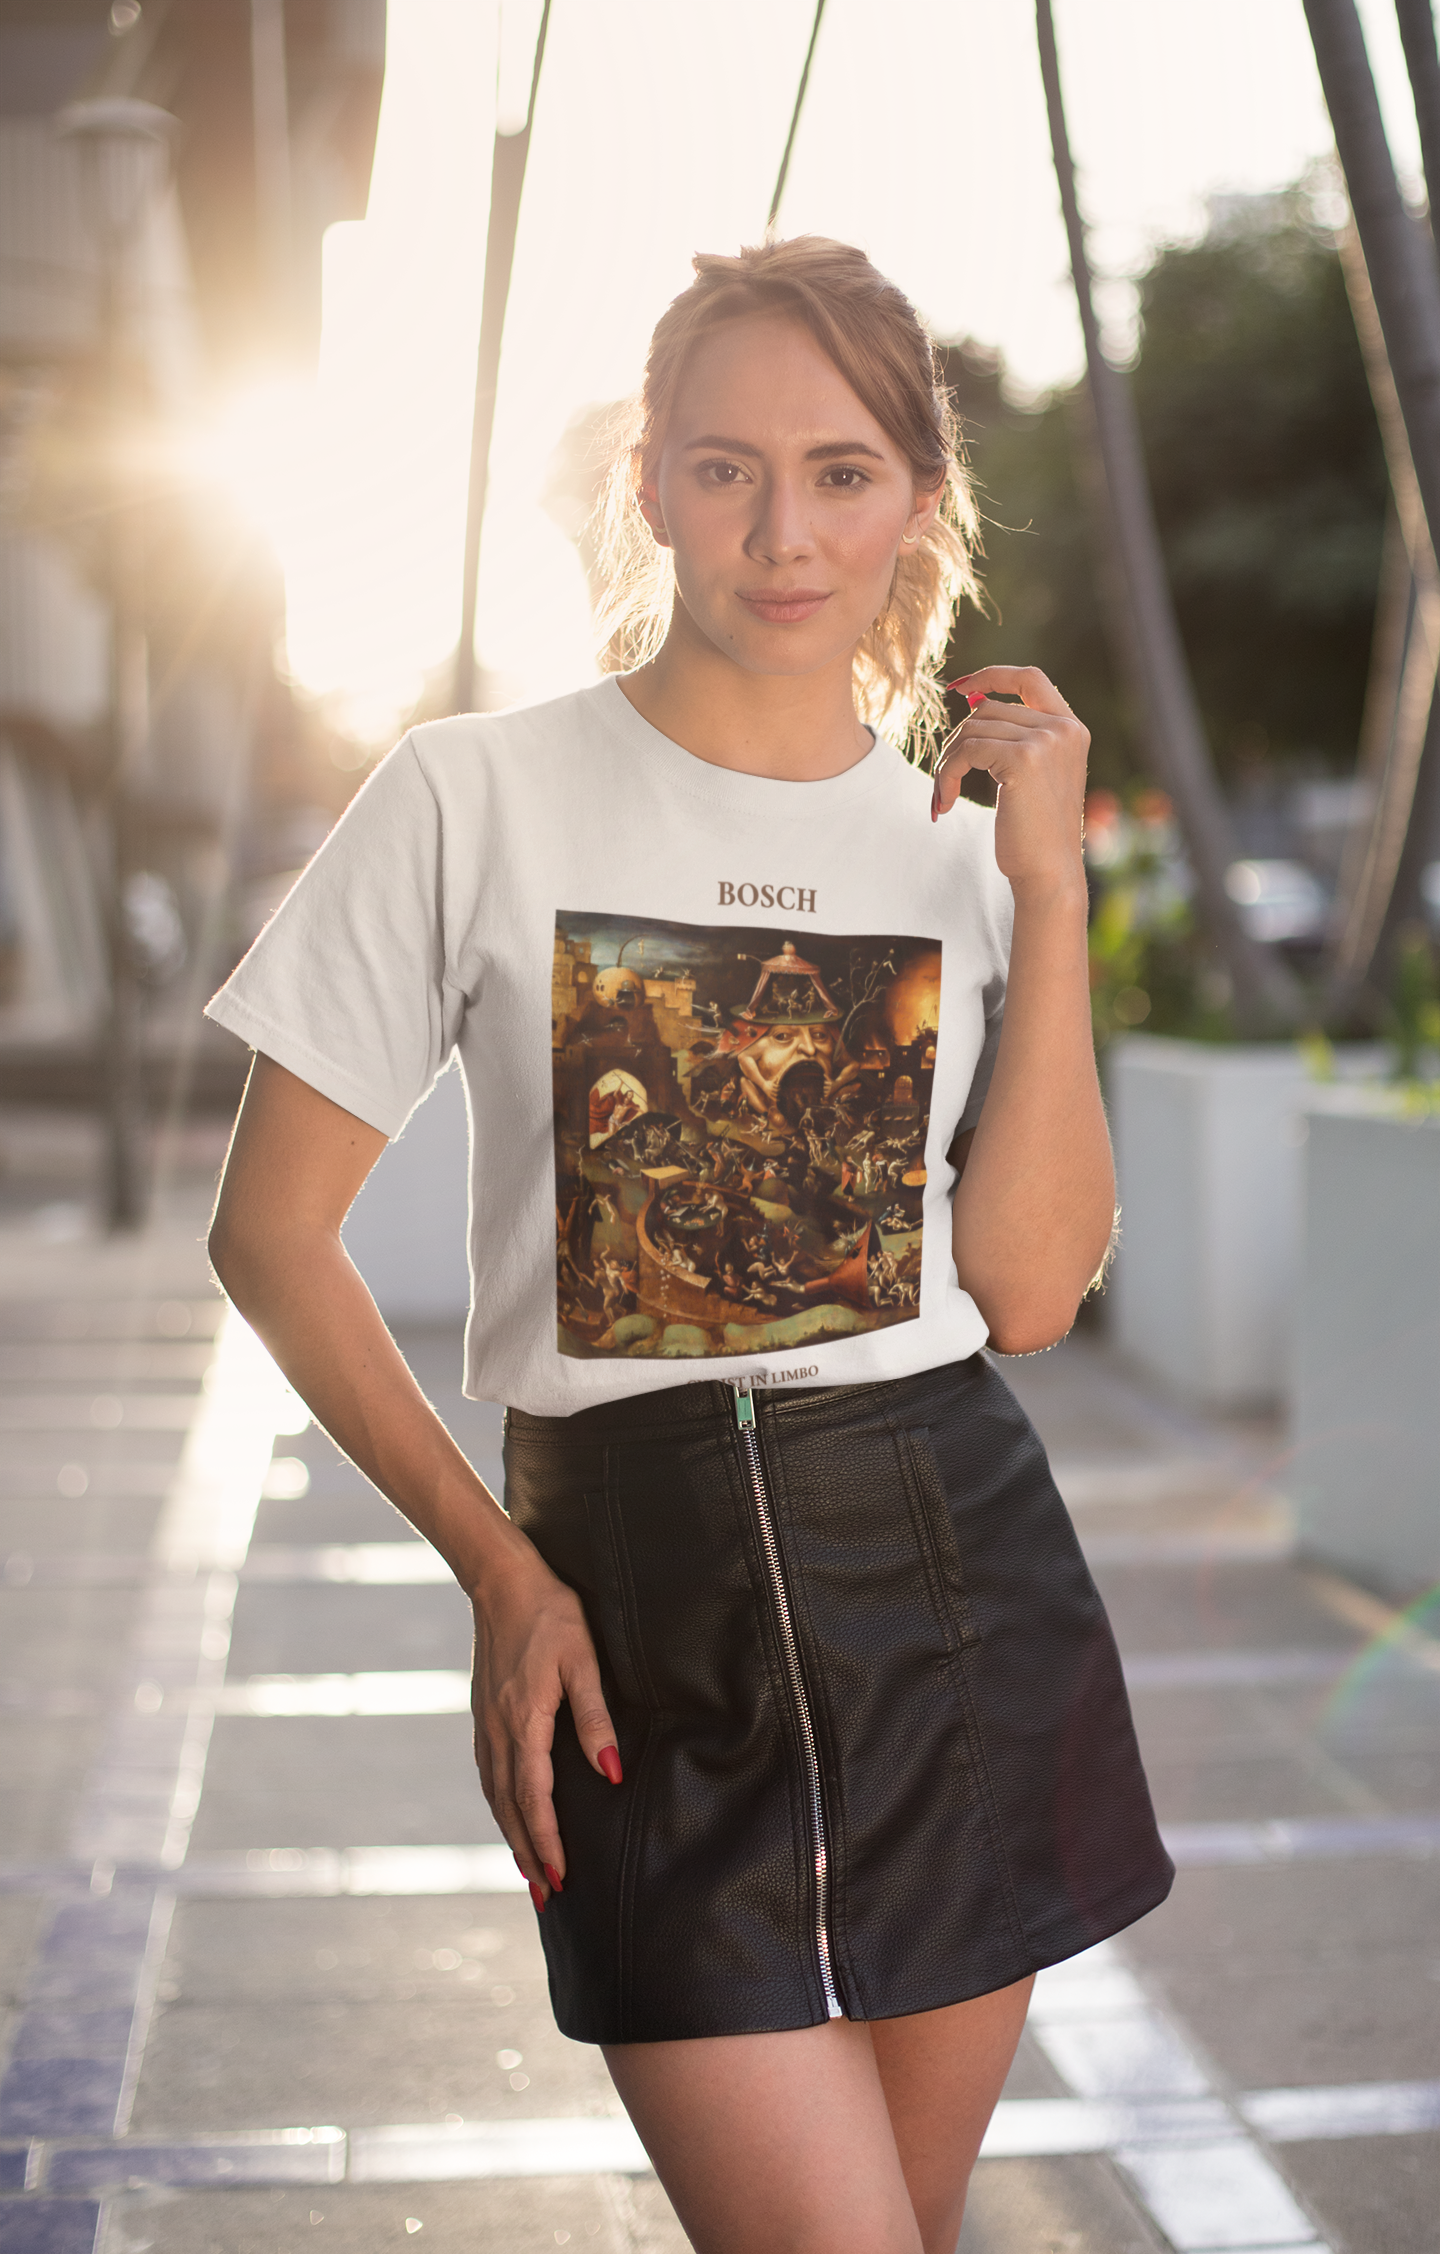 Hieronymus Bosch Christ in Limbo T-shirt